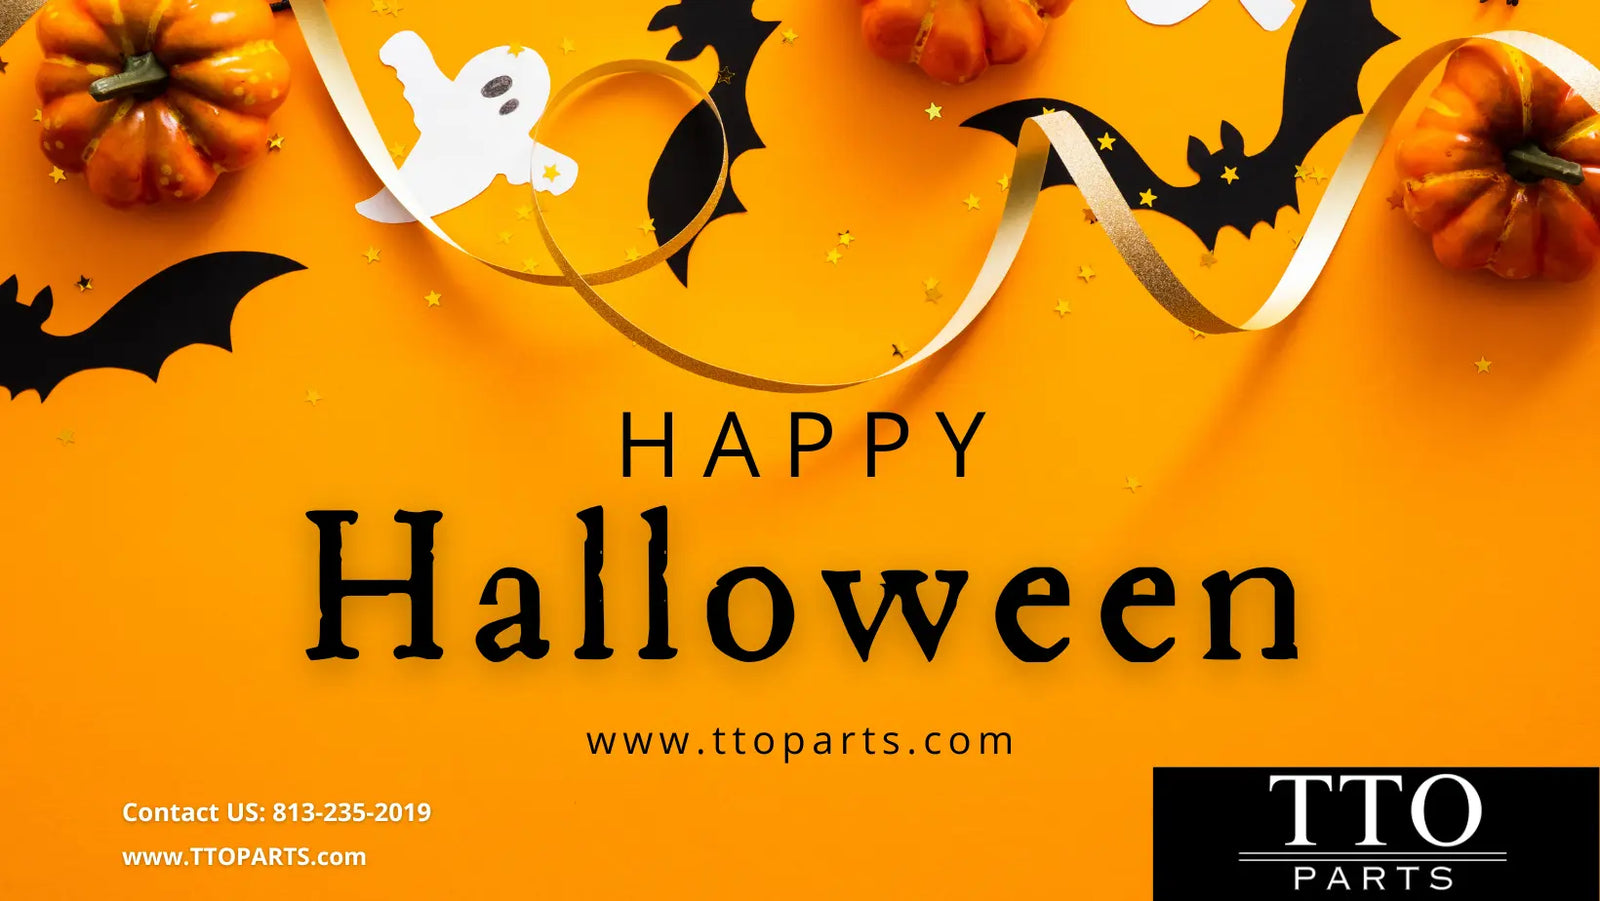 TTOParts' Spooktacular Savings: A Month-Long Halloween Celebration!